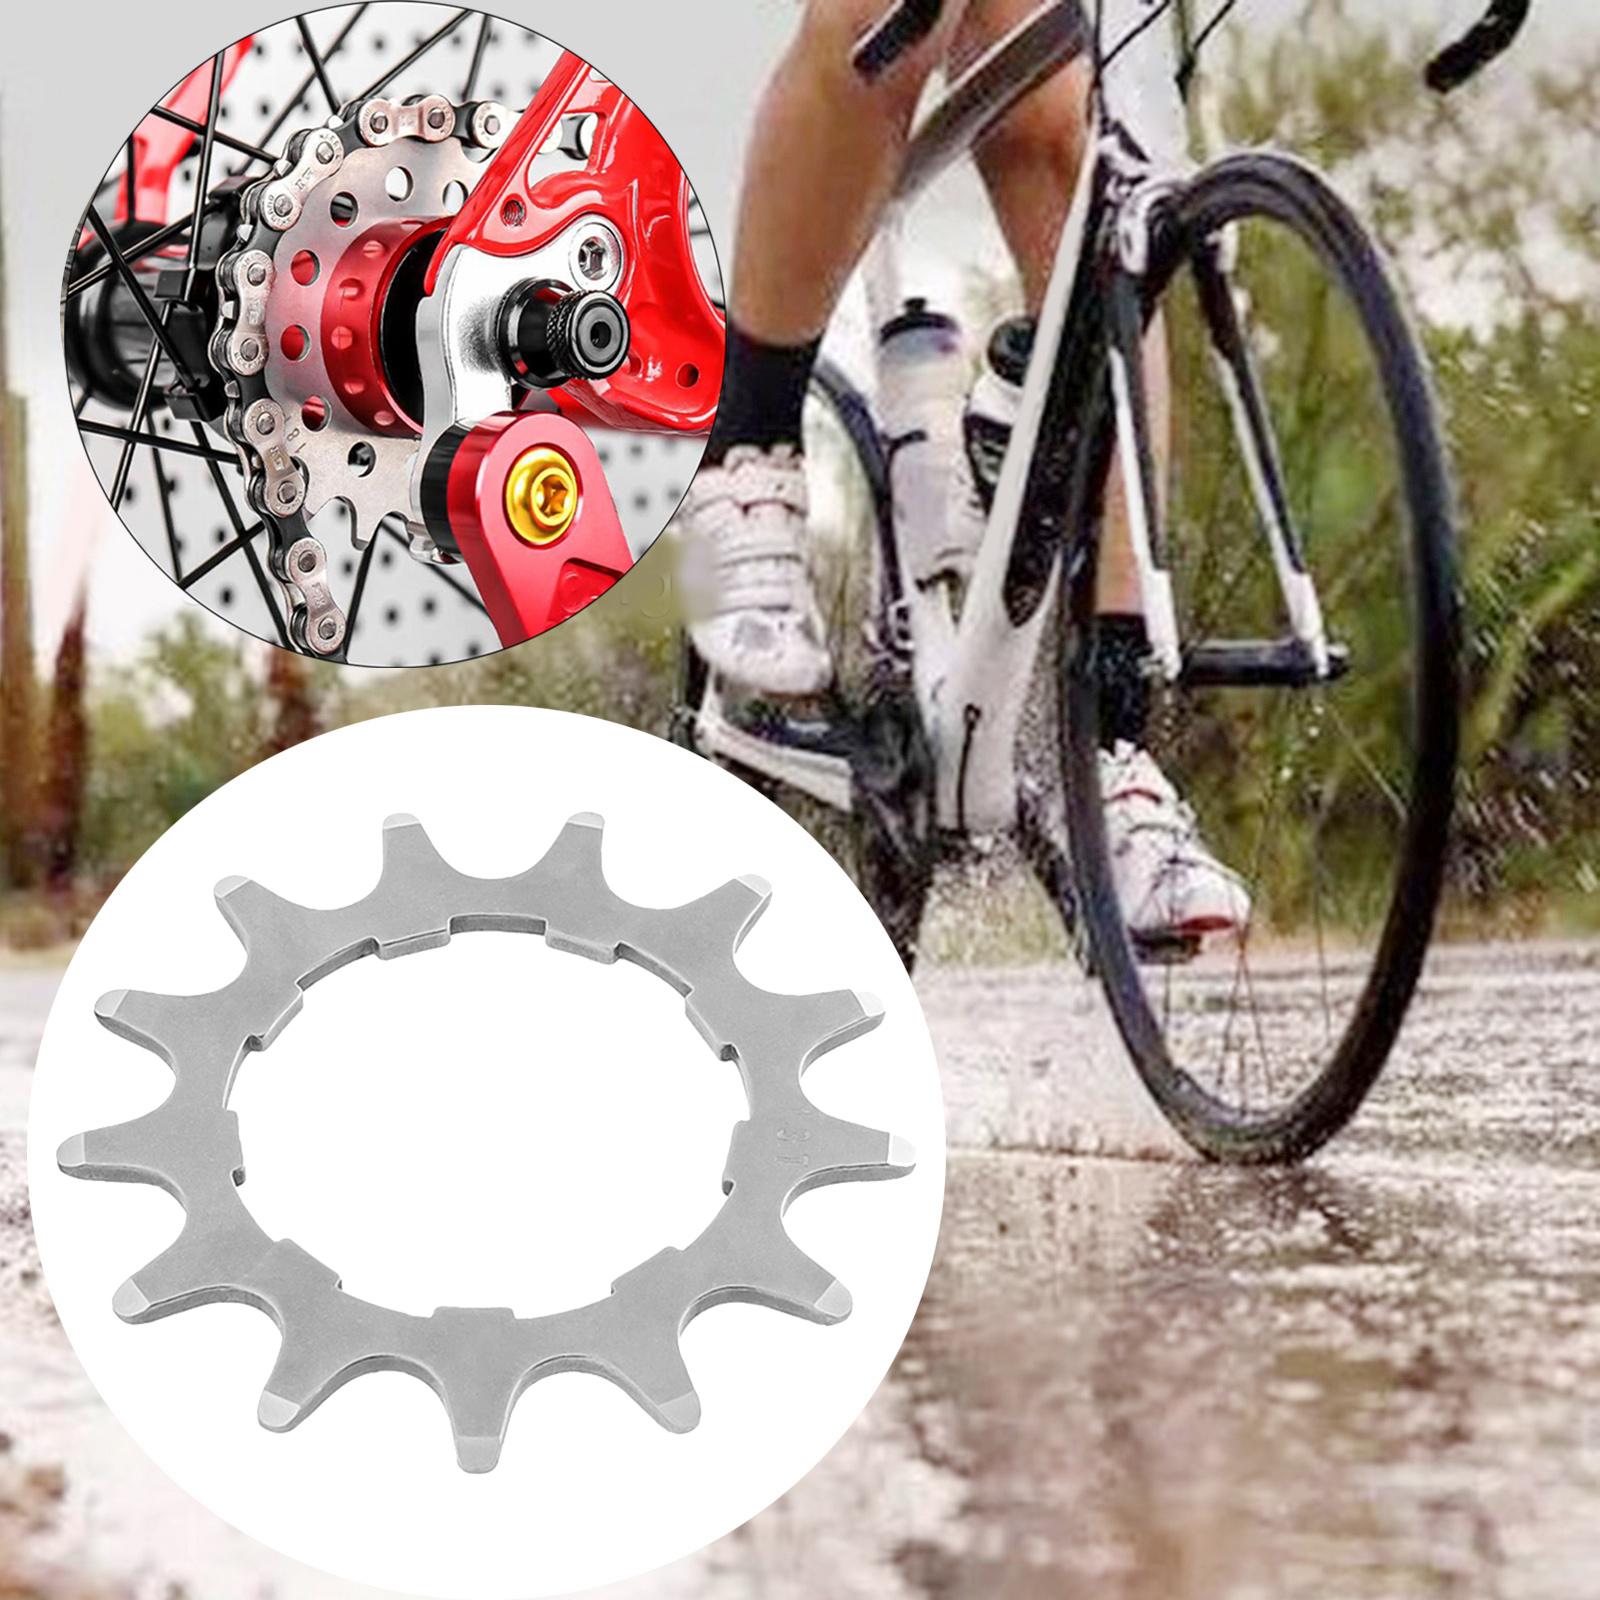 Single Speed Cassette Cog Bike Freewheel Bicycle Refit Parts Components 13T